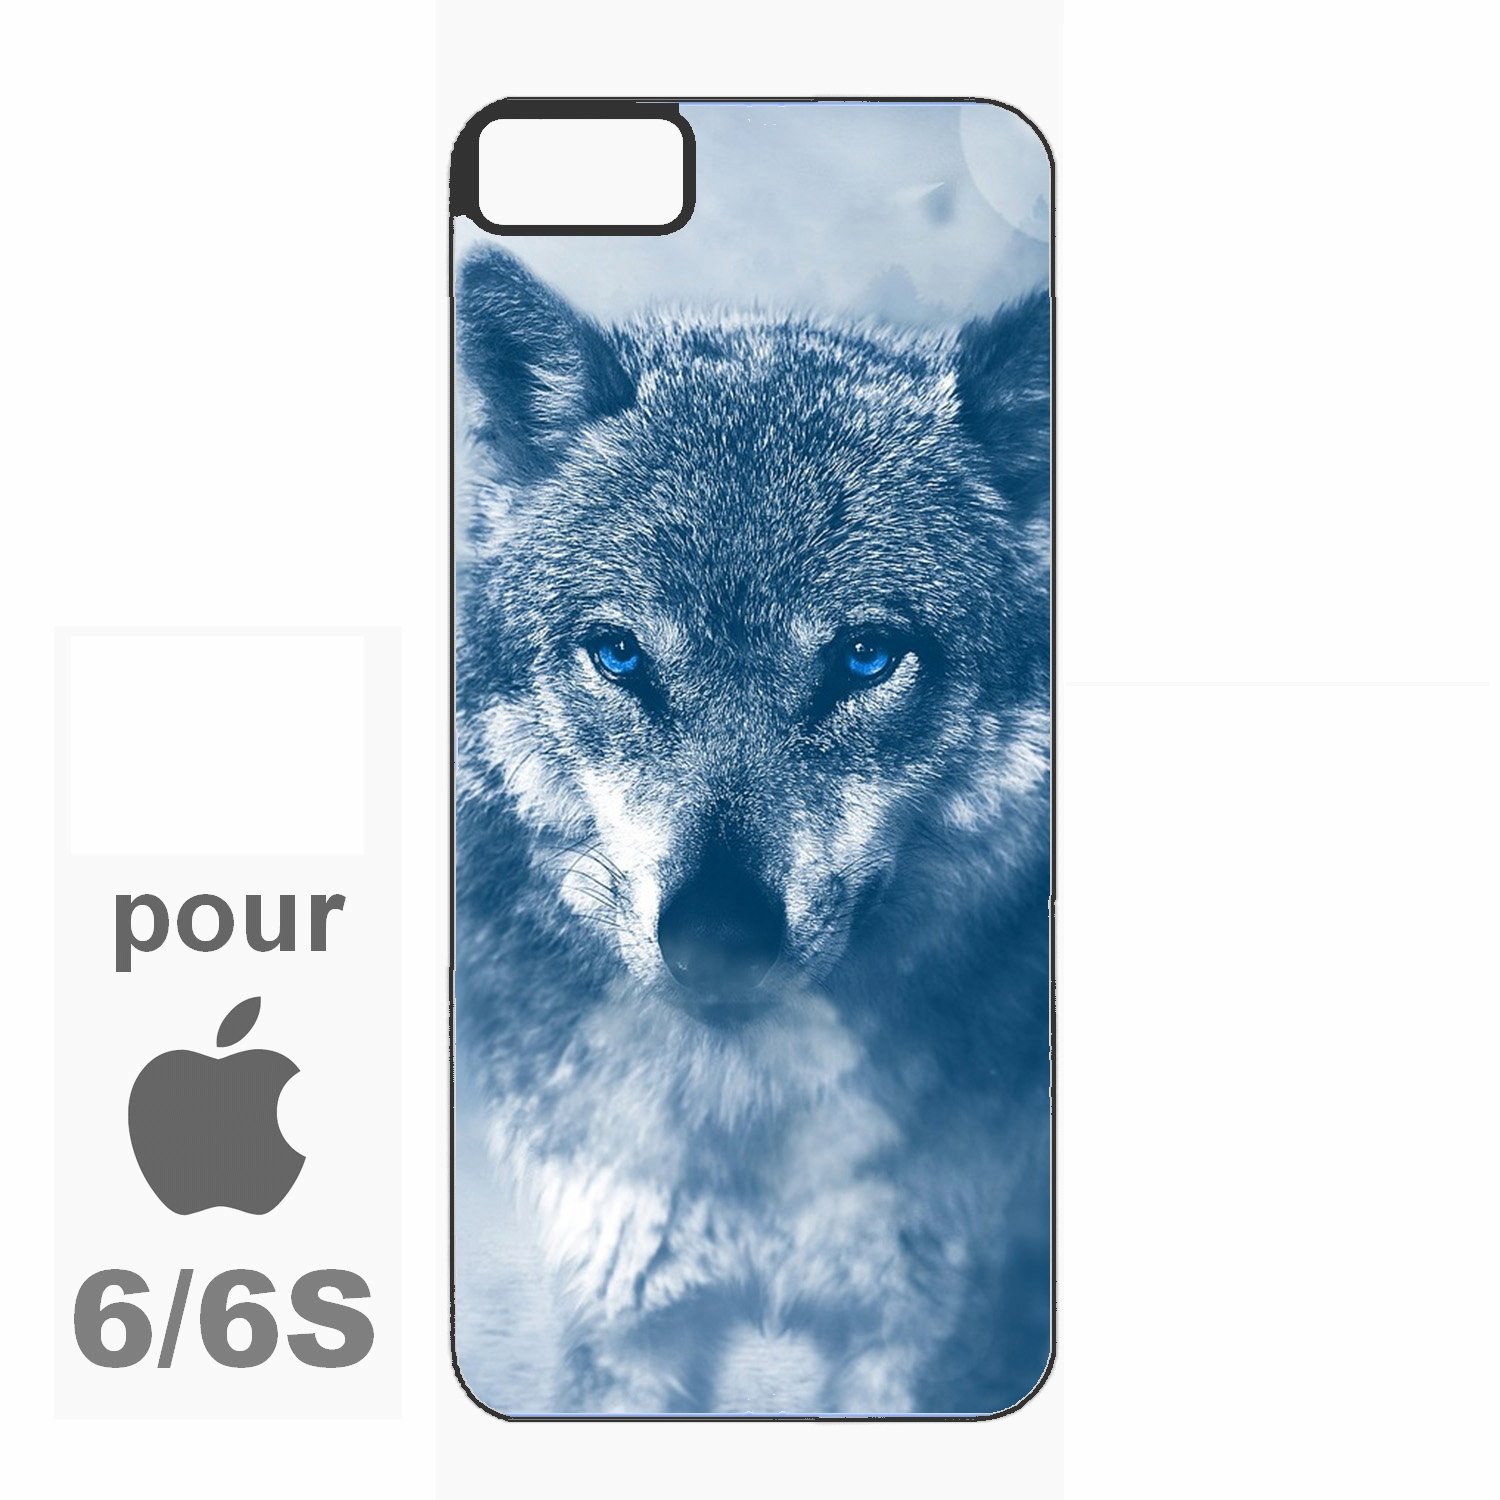 iphone 6 coque animal